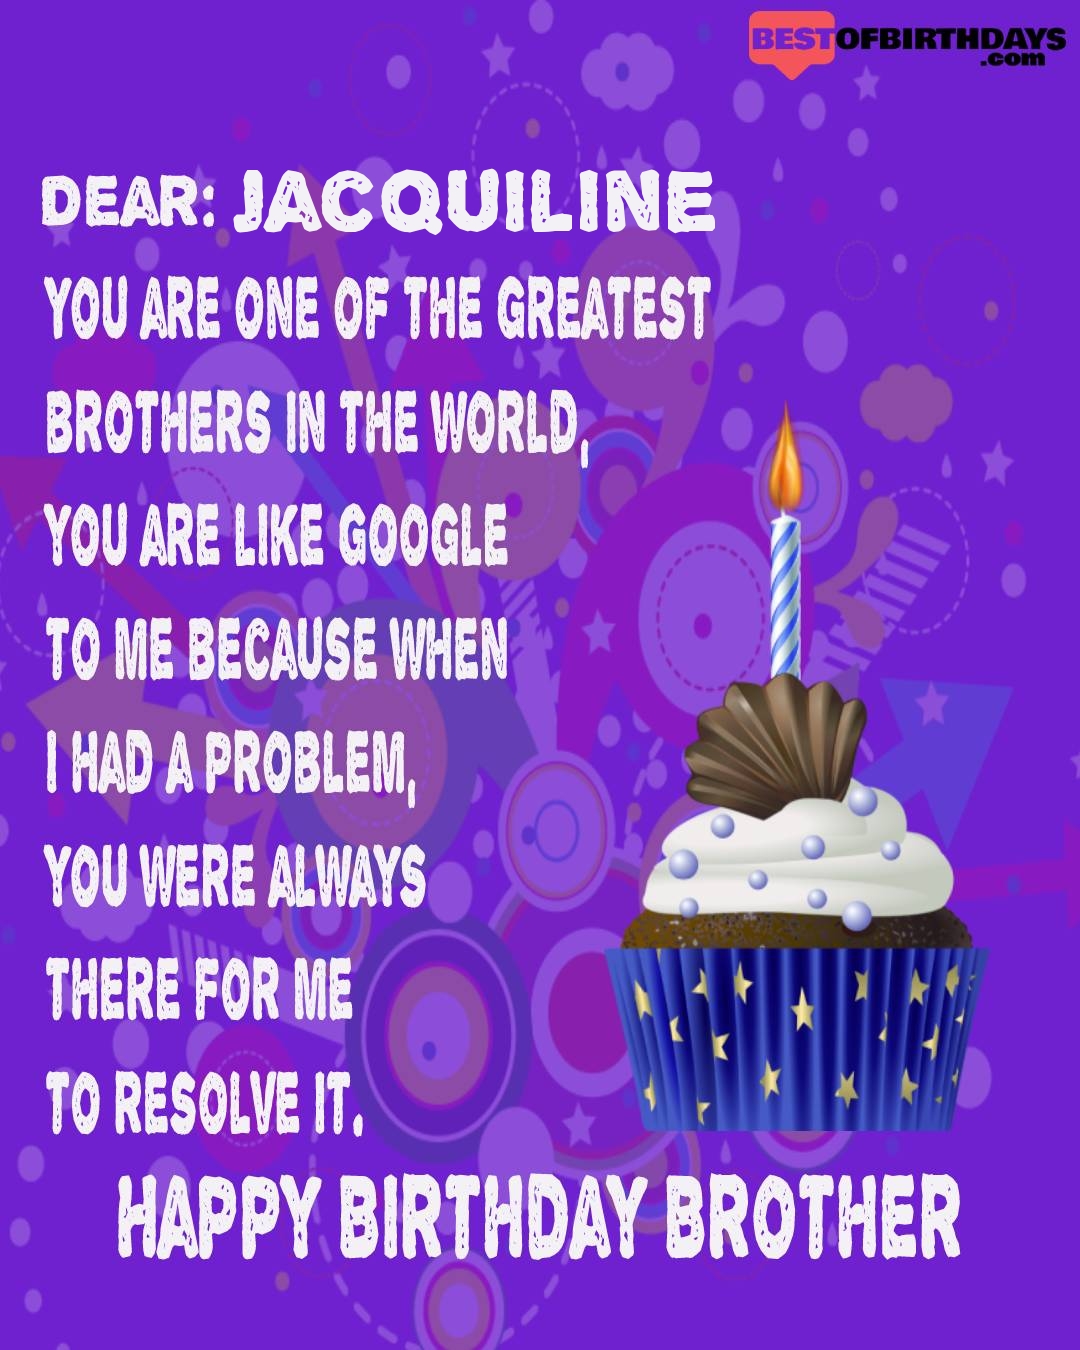 Happy birthday jacquiline bhai brother bro